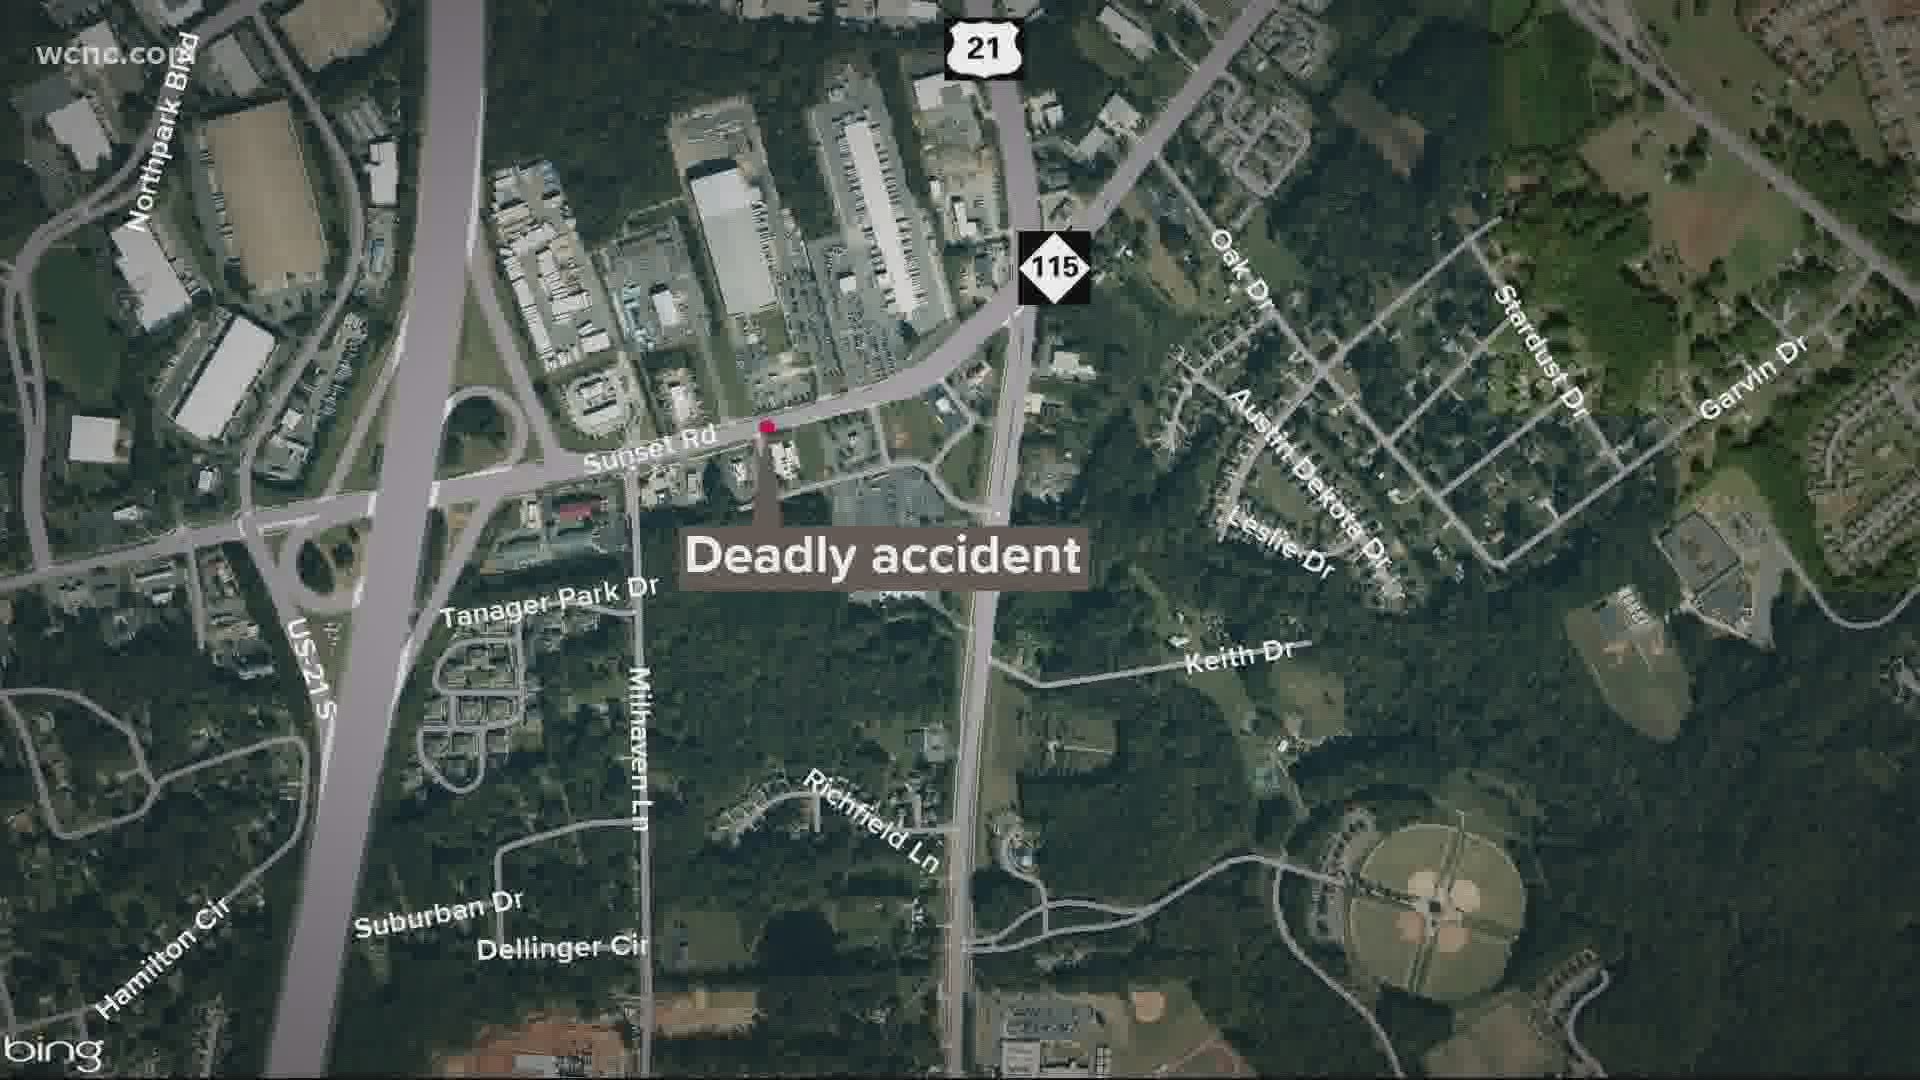 The three-vehicle crash happened at 3:30 p.m. on Saturday afternoon.